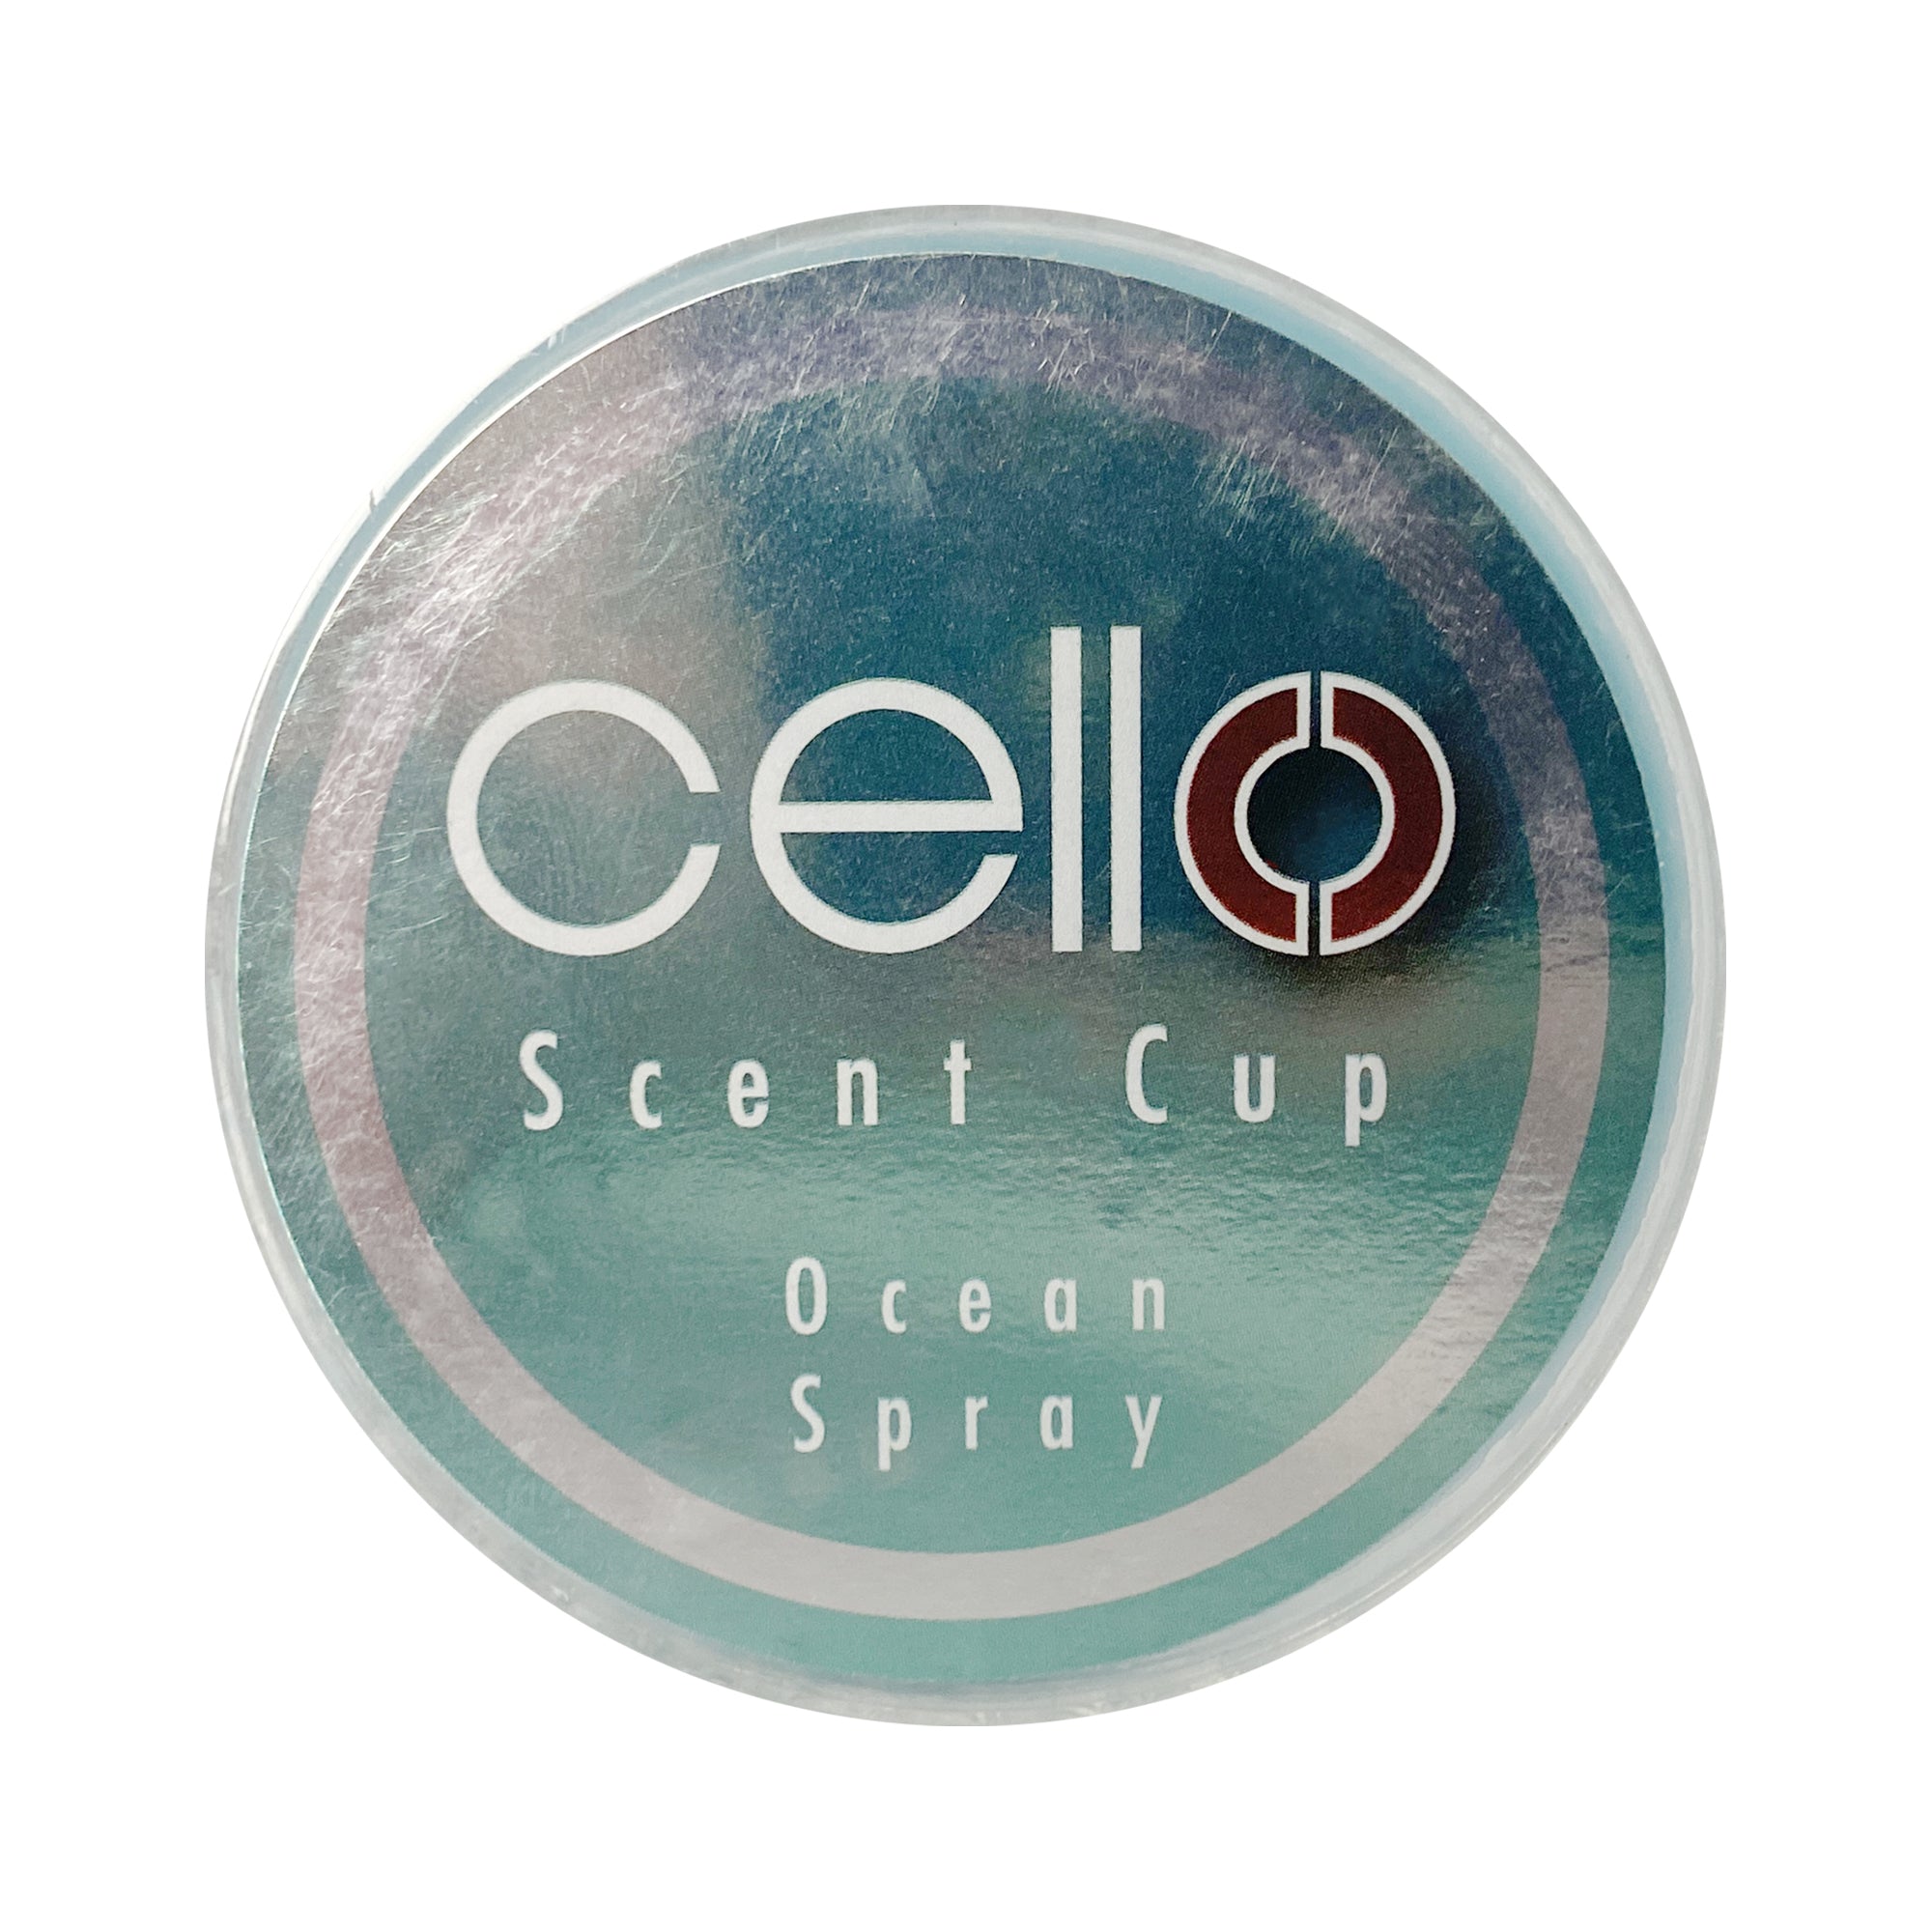 Cello - Scent Cup - Ocean Spray